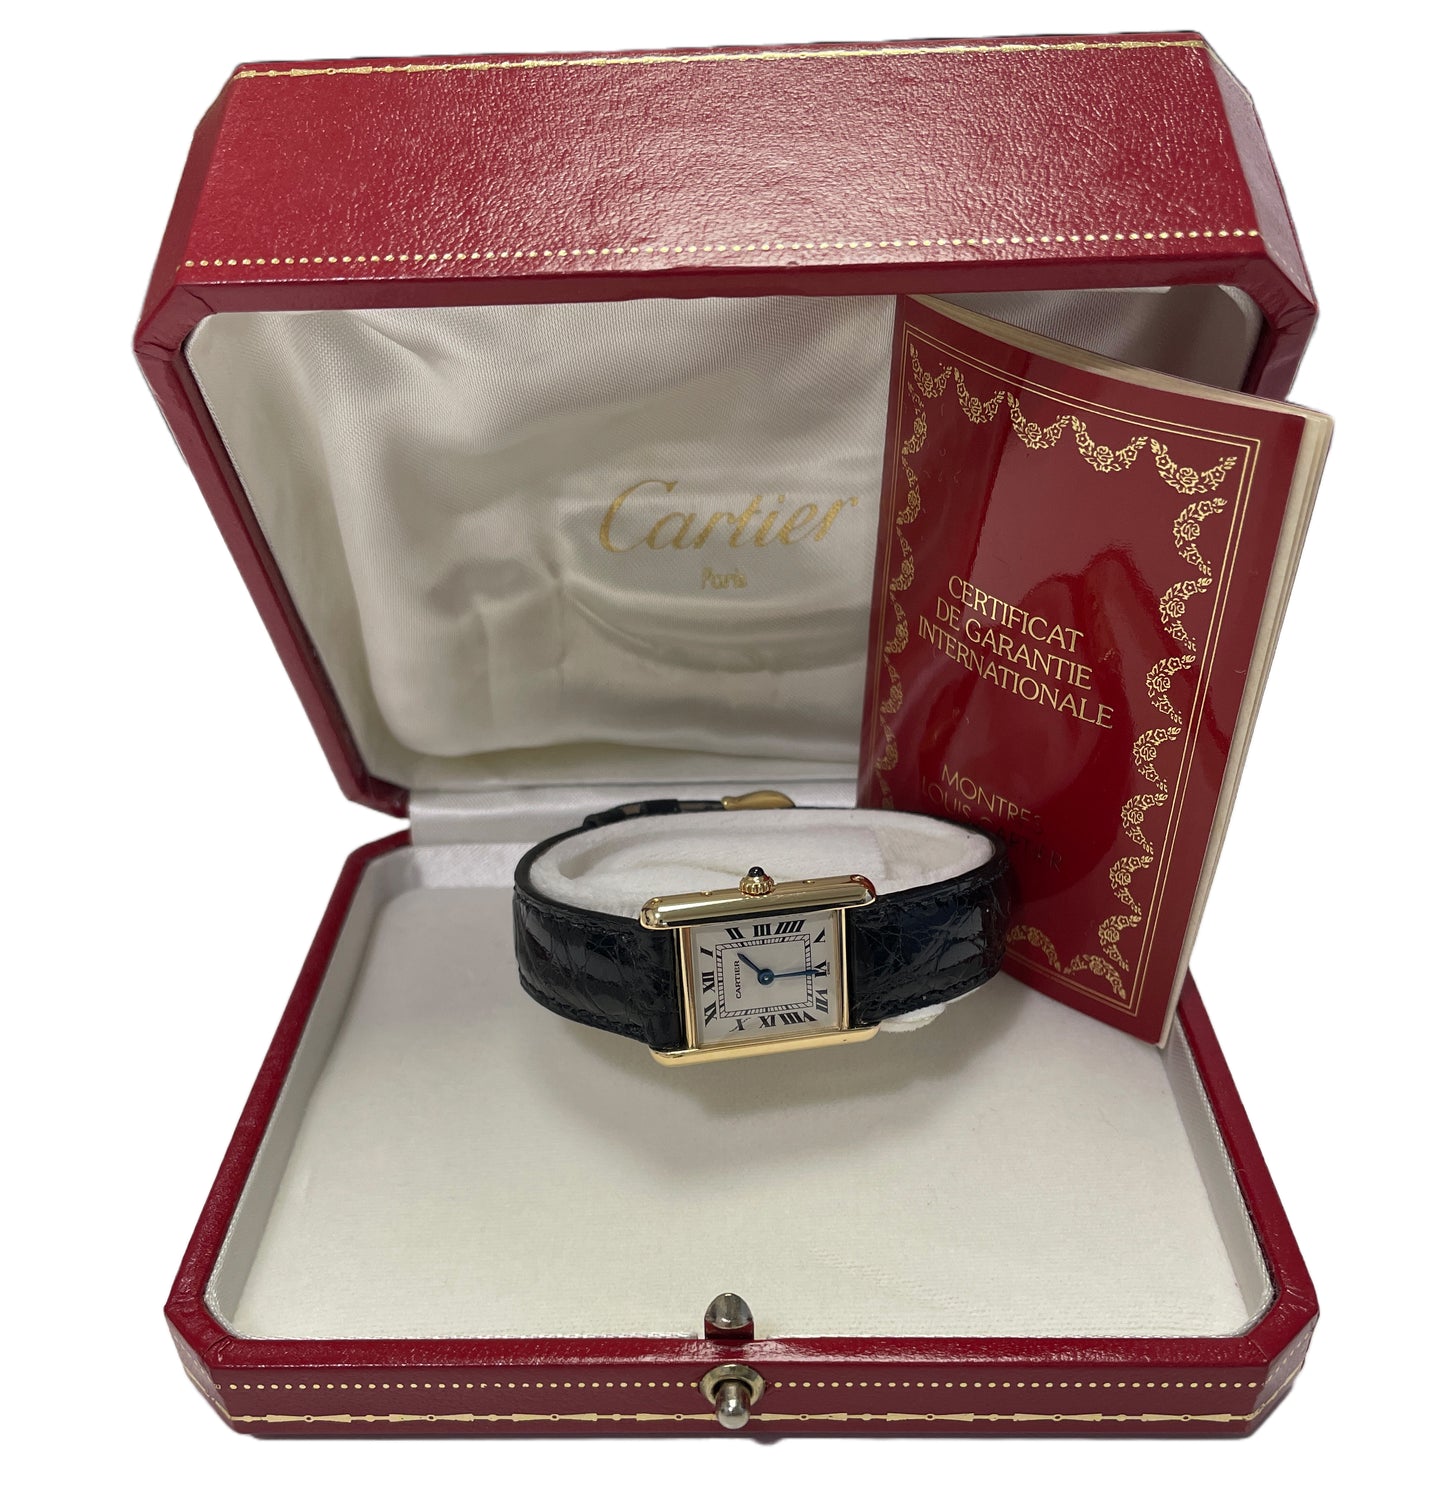 PAPERS Cartier Tank Classic Quartz 18k Yellow Gold White Roman Leather Watch BOX